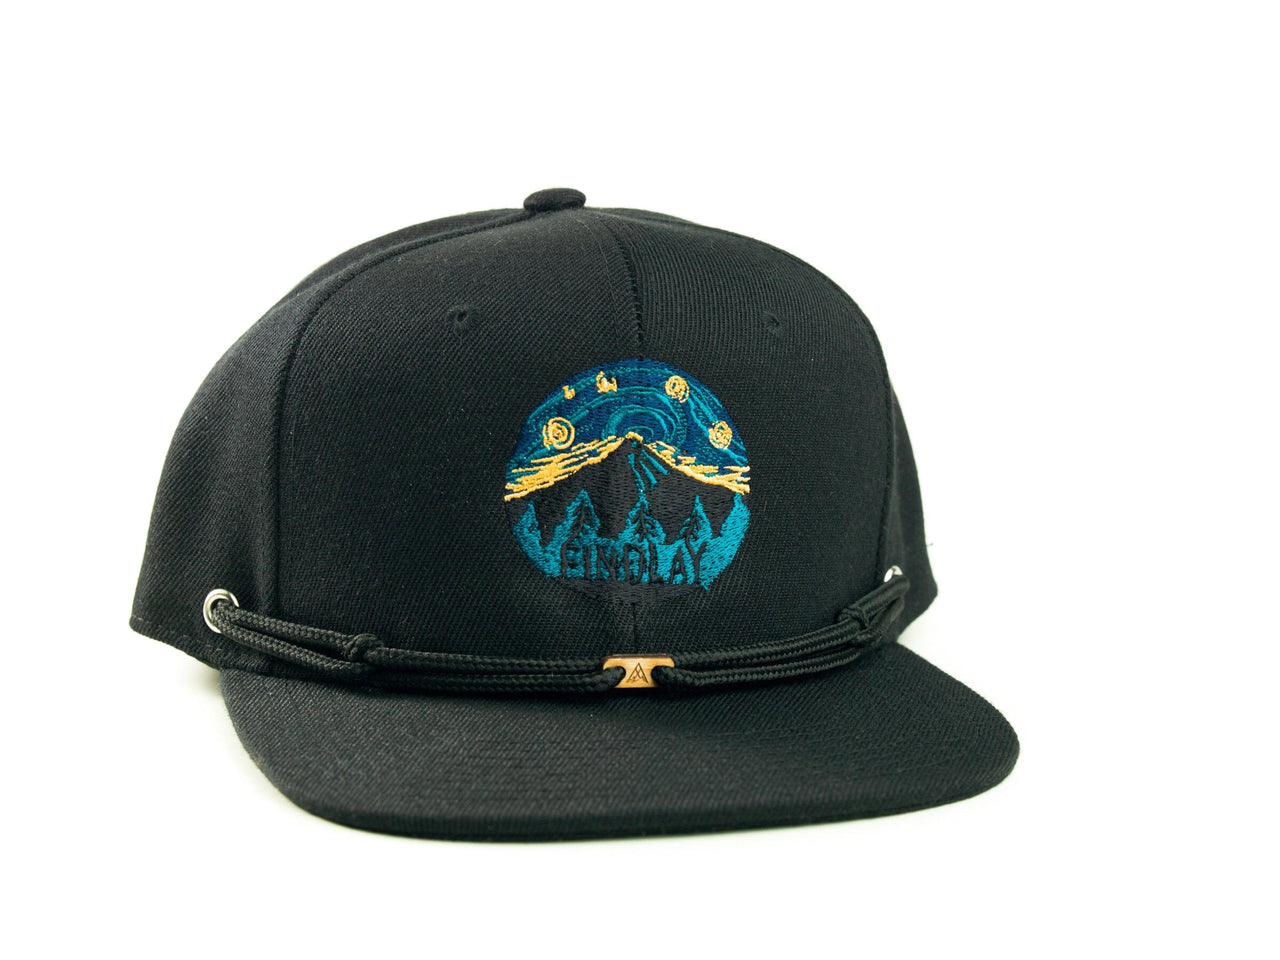 Starry Mountain Nights Hats Findlay Hats 